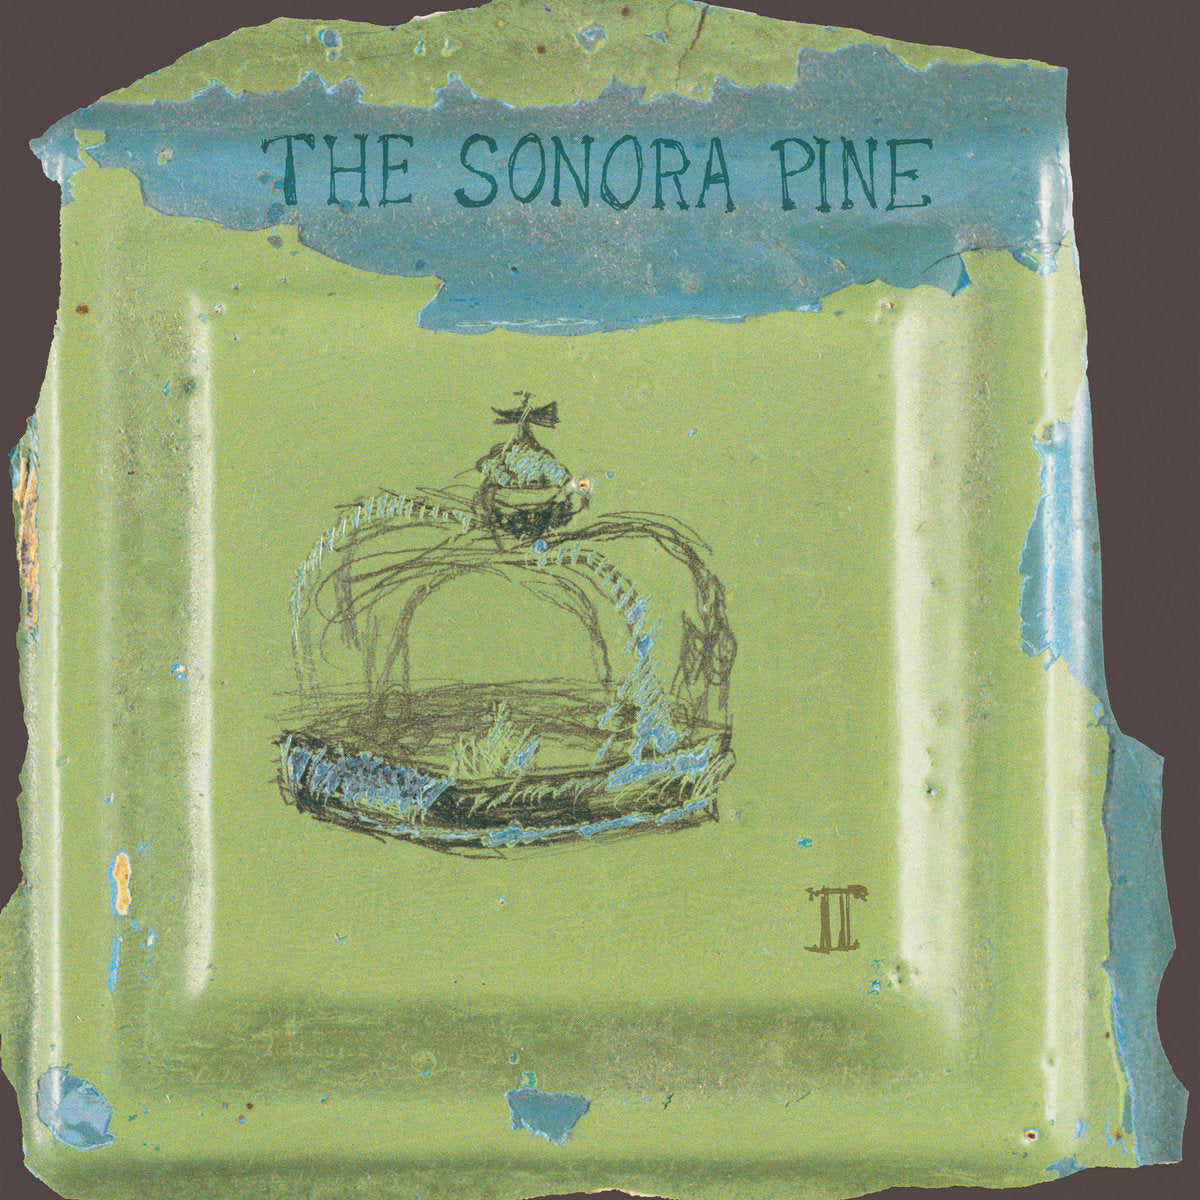 The Sonora Pine - II LP